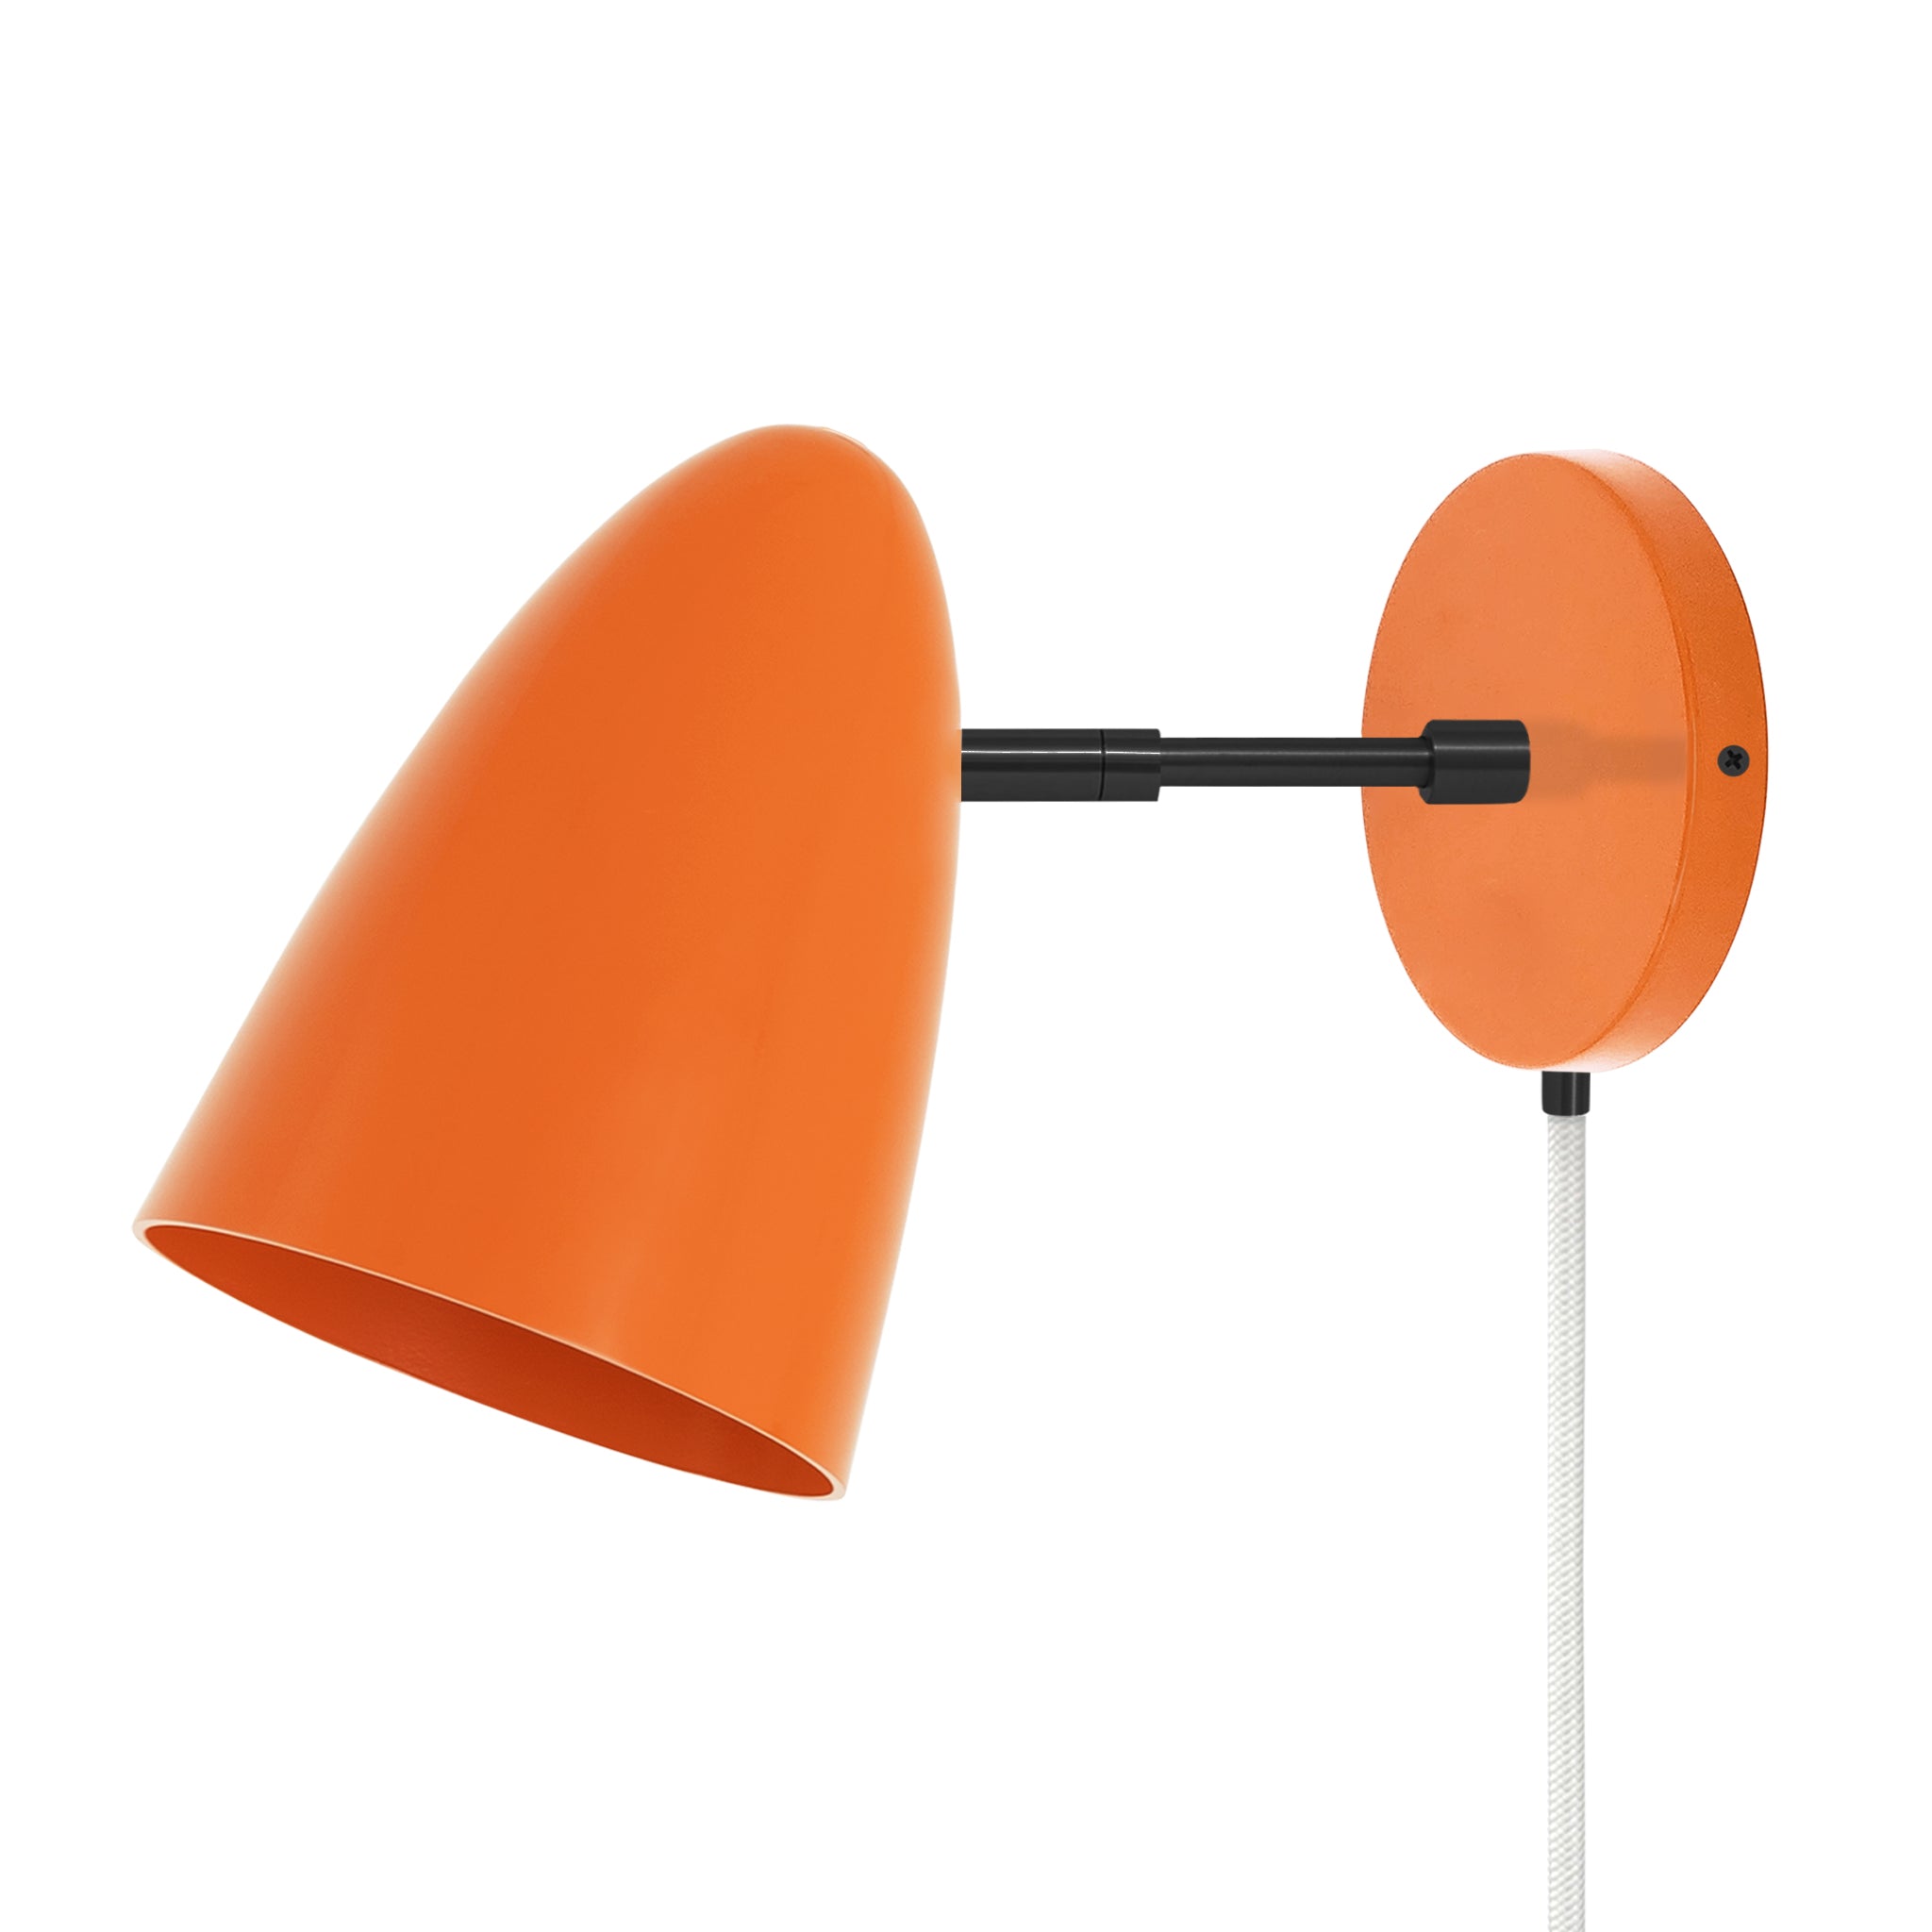 Black and orange color Boom plug-in sconce 3" arm Dutton Brown lighting